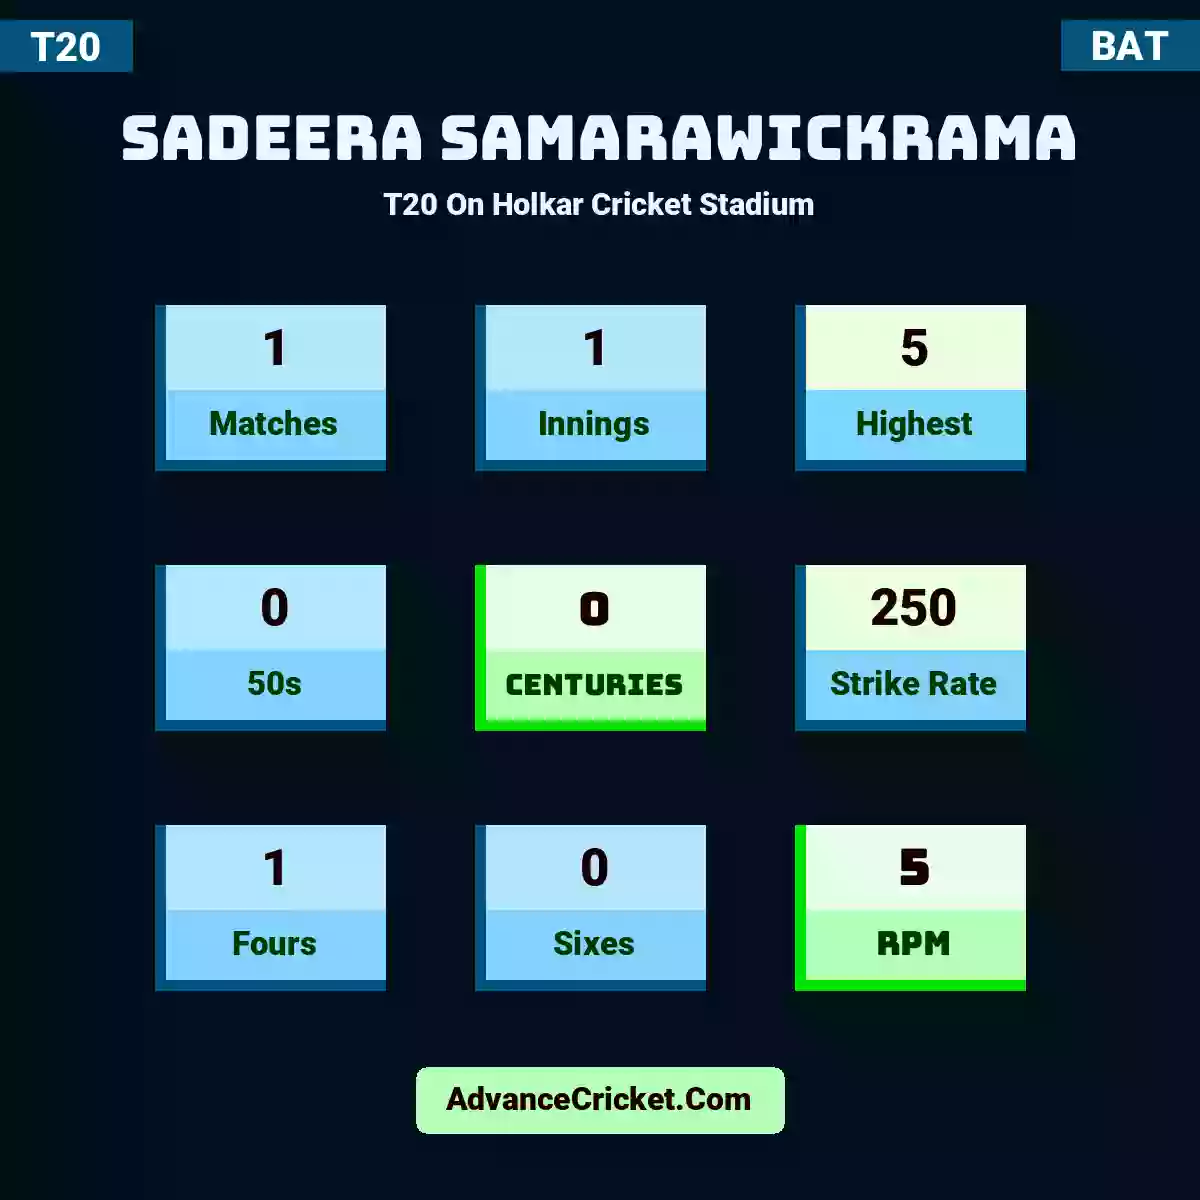 Sadeera Samarawickrama T20  On Holkar Cricket Stadium, Sadeera Samarawickrama played 1 matches, scored 5 runs as highest, 0 half-centuries, and 0 centuries, with a strike rate of 250. S.Samarawickrama hit 1 fours and 0 sixes, with an RPM of 5.